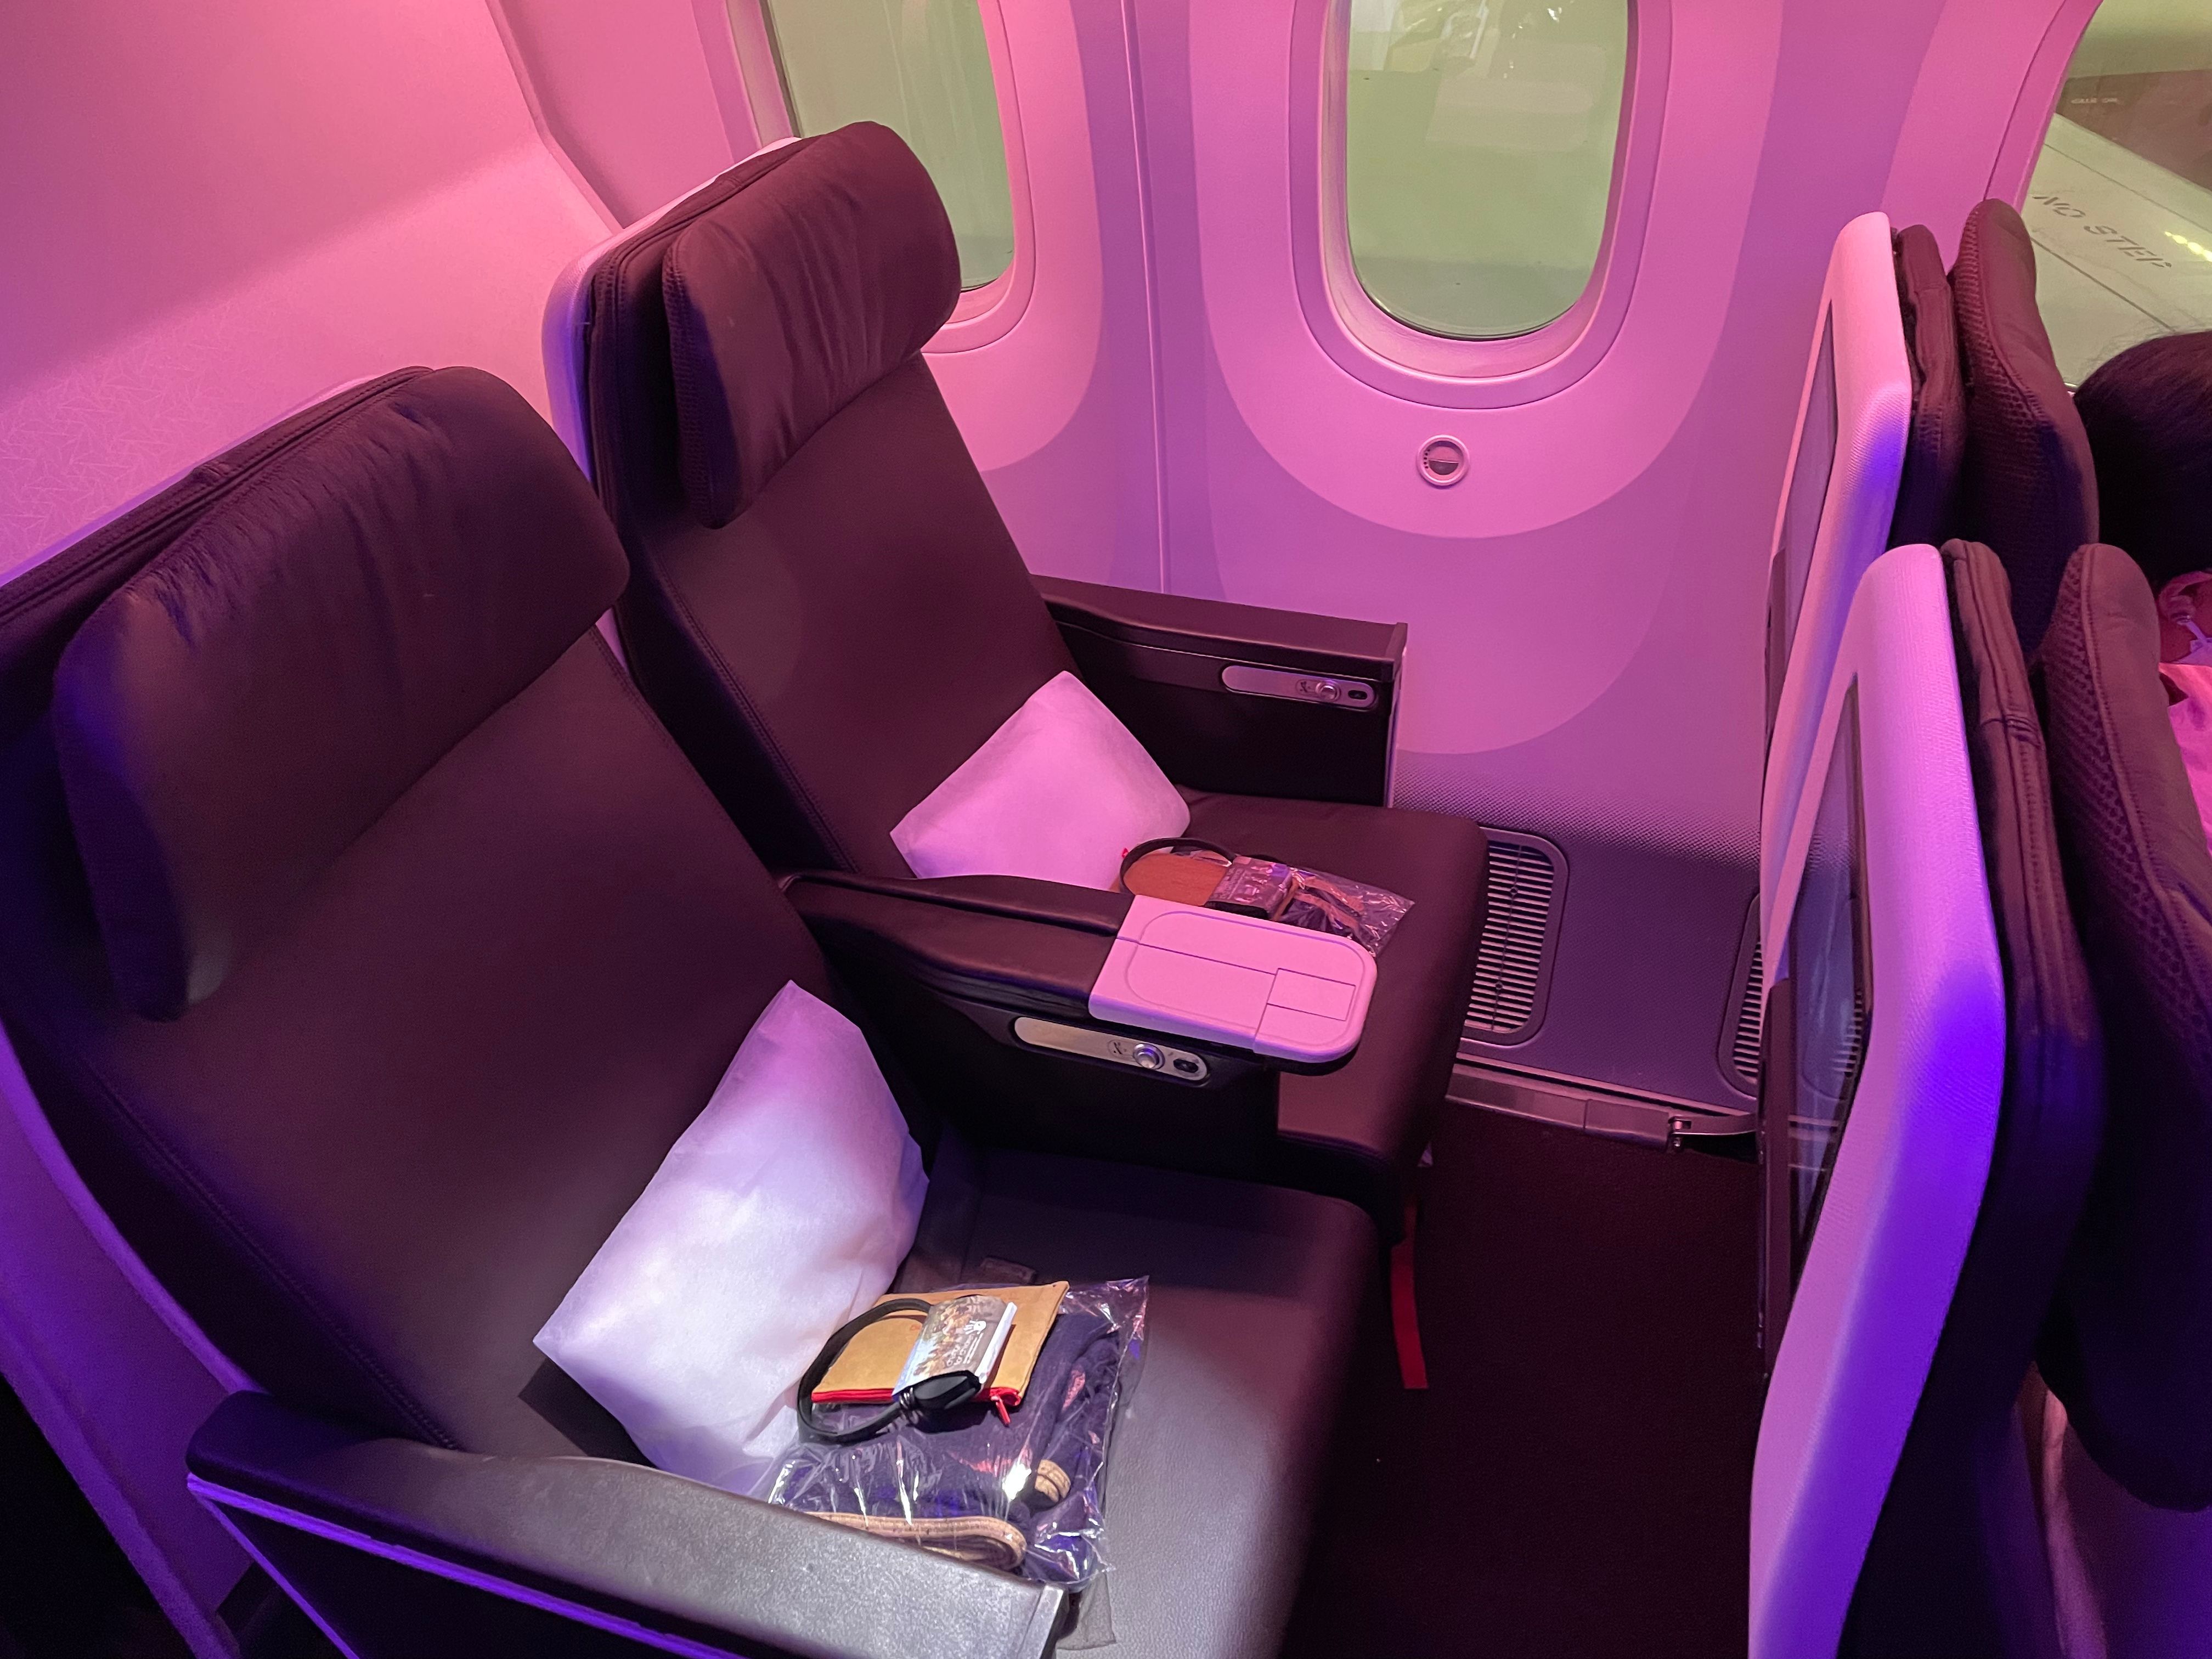 Inside the Virgin Atlantic premium economy cabin.